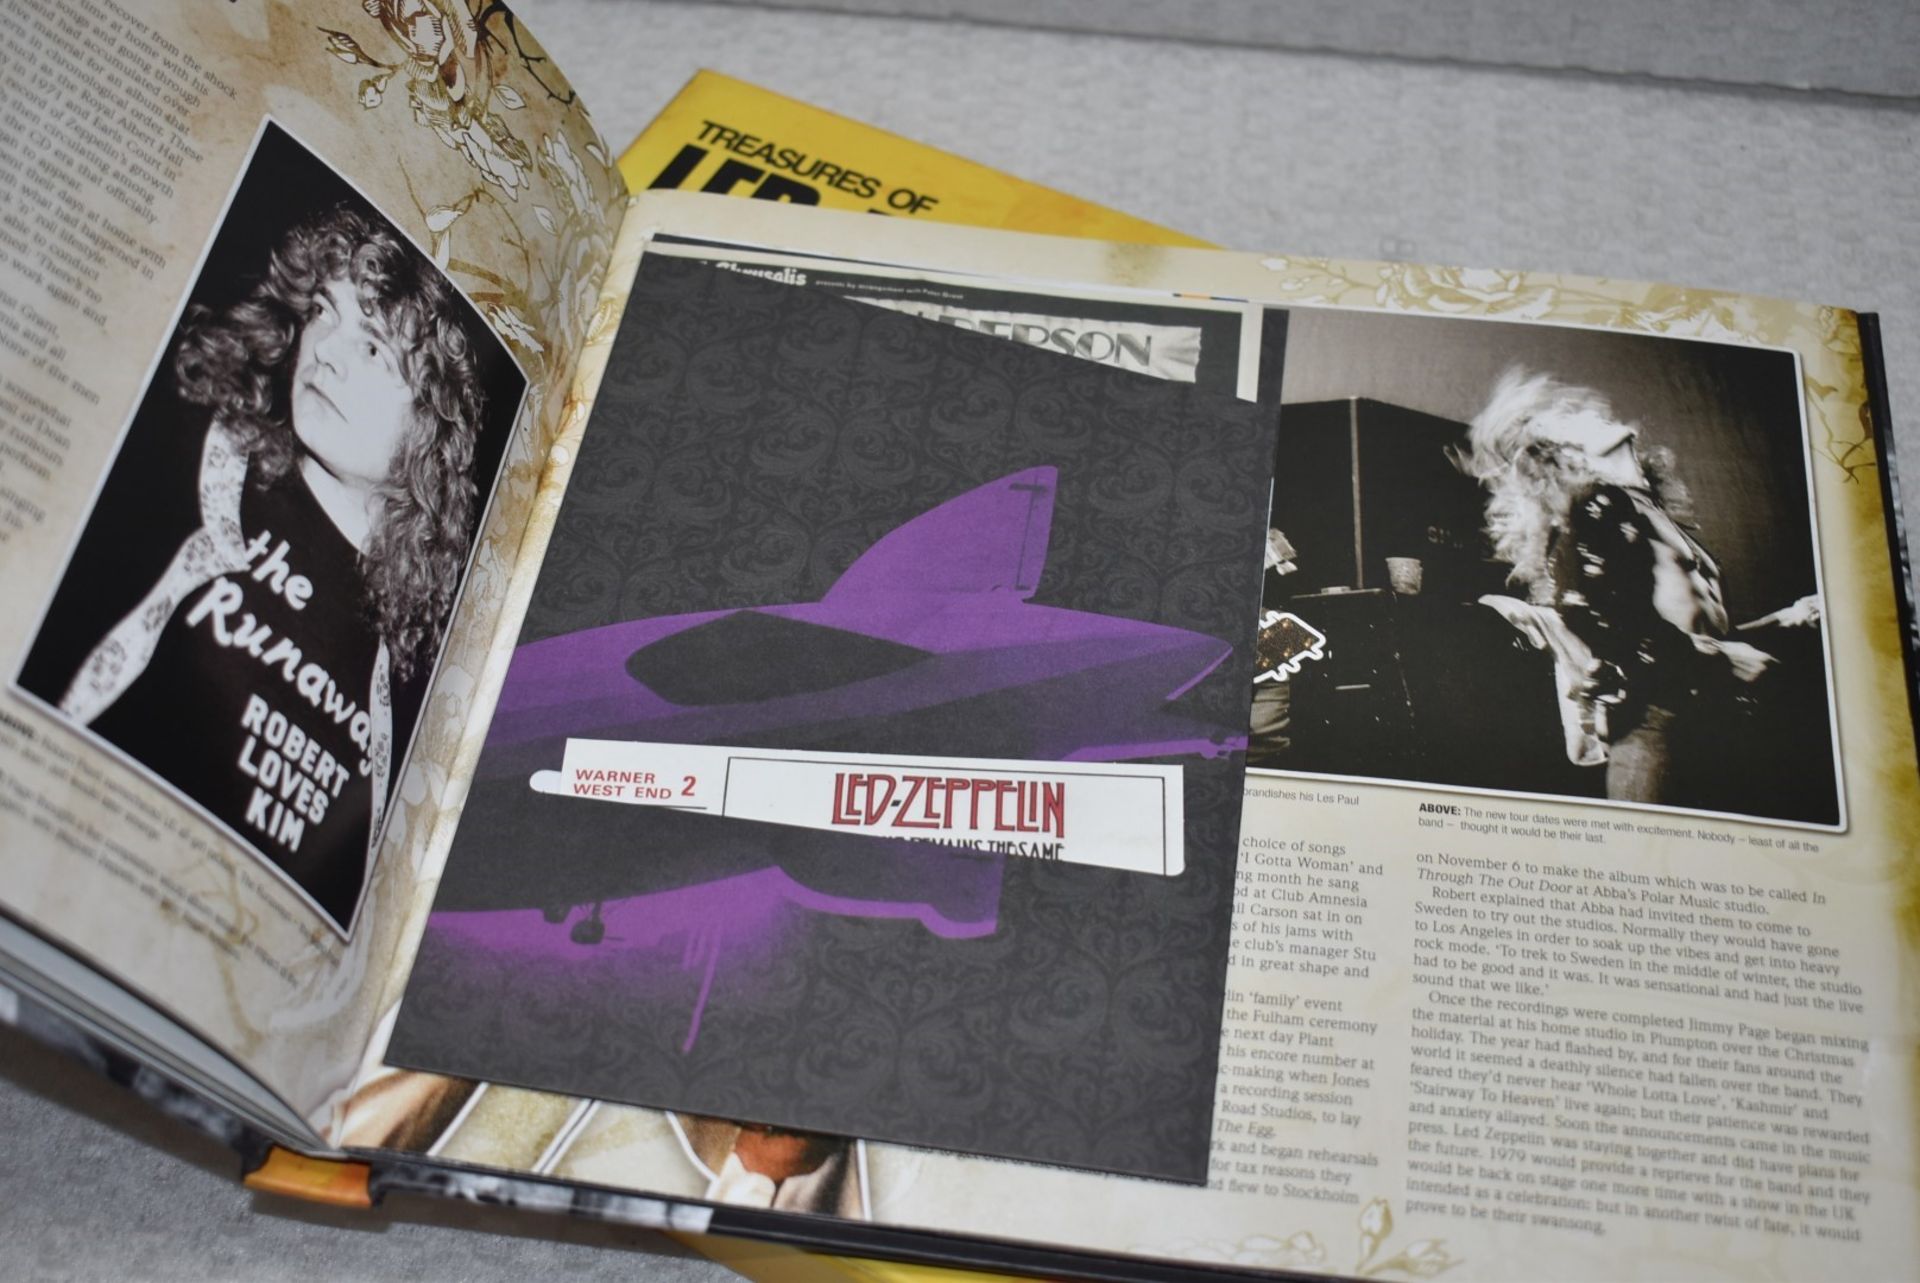 1 x Treasures of Led Zeppelin Box Set - Includes Illustrated Book and Facsimiles of Rare Memorabilia - Image 6 of 9